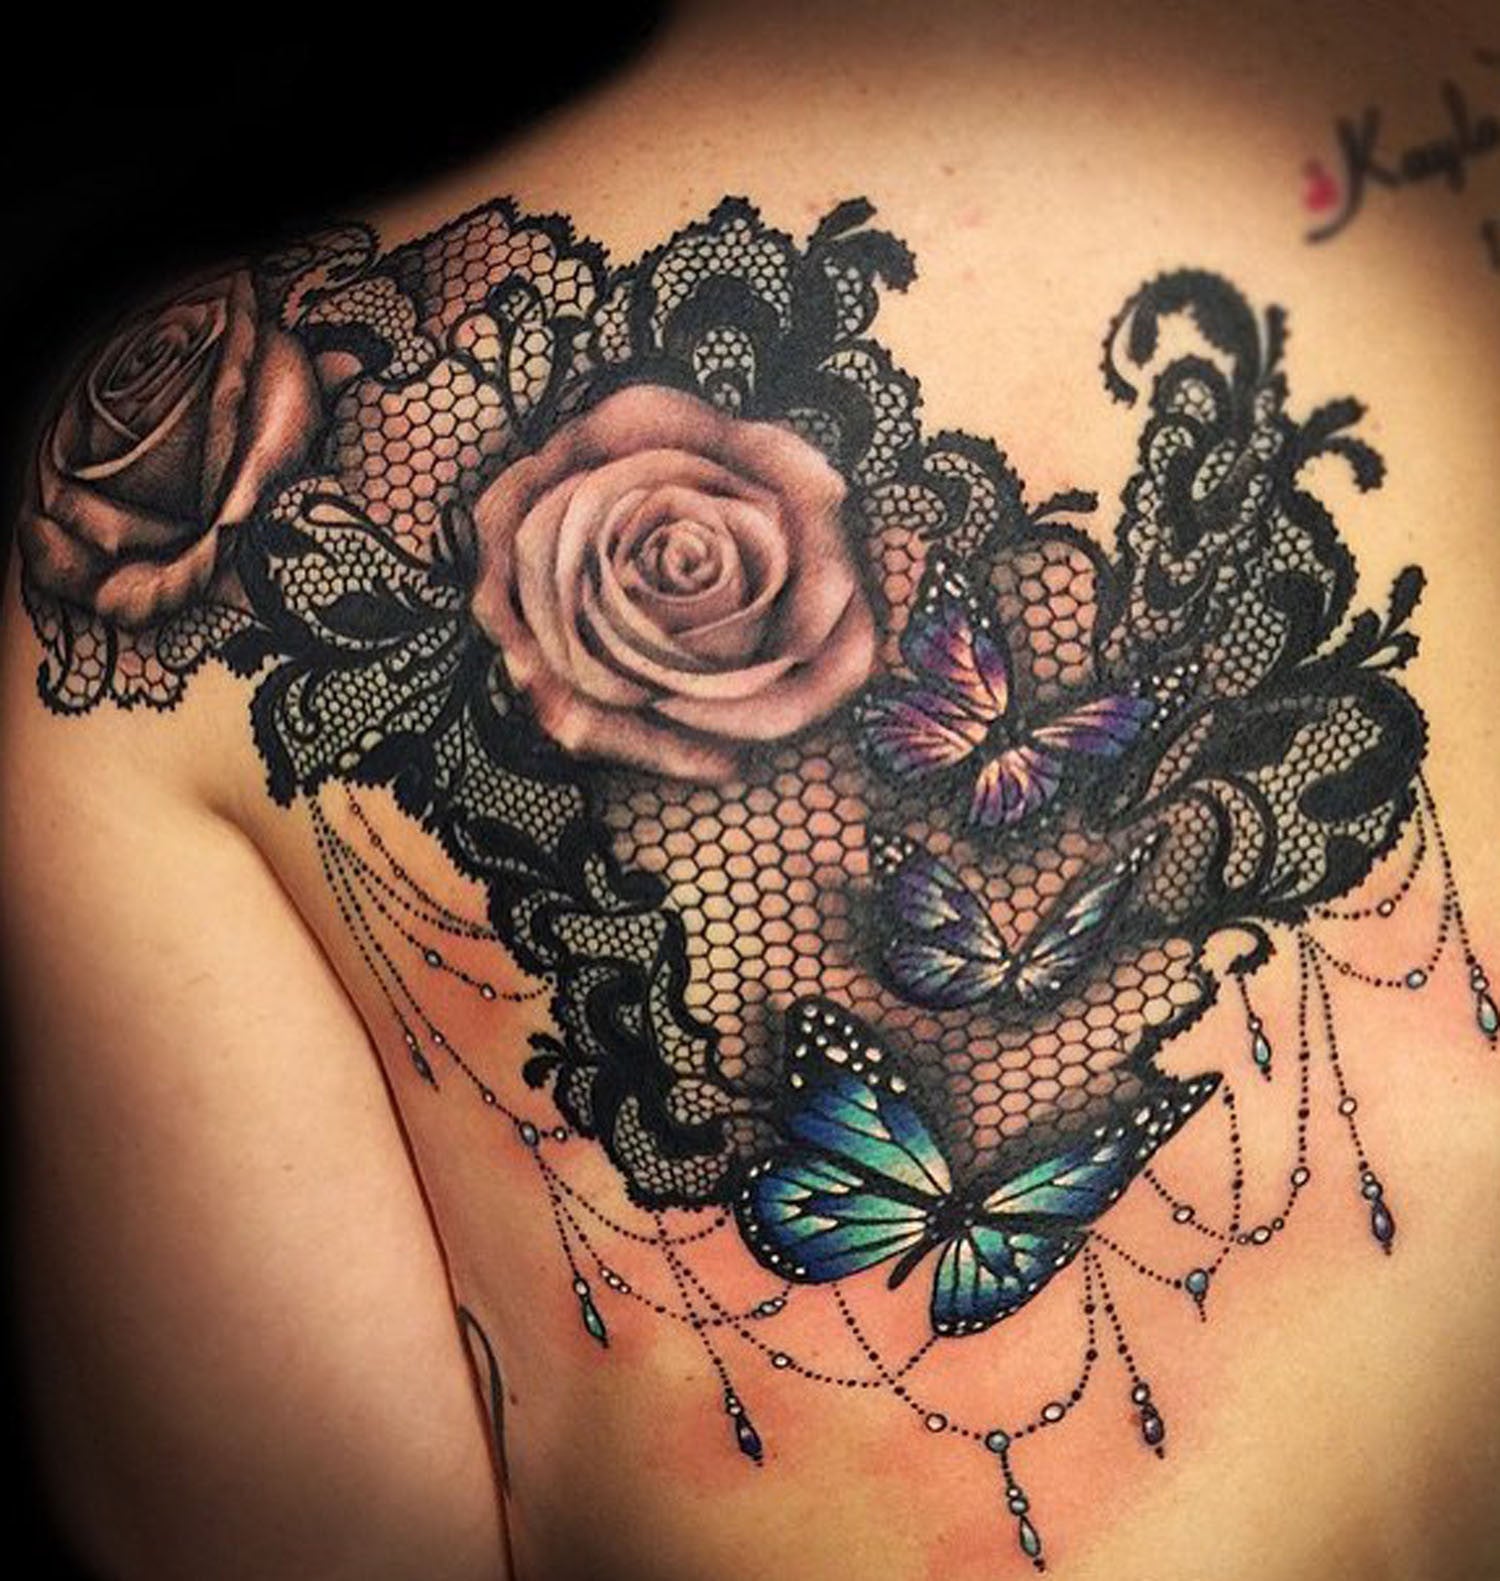 Lace butterfly rose tattoo design  Oberarm tattoo frauen blumen  Einzigartige tattoos Rose tattoodesign